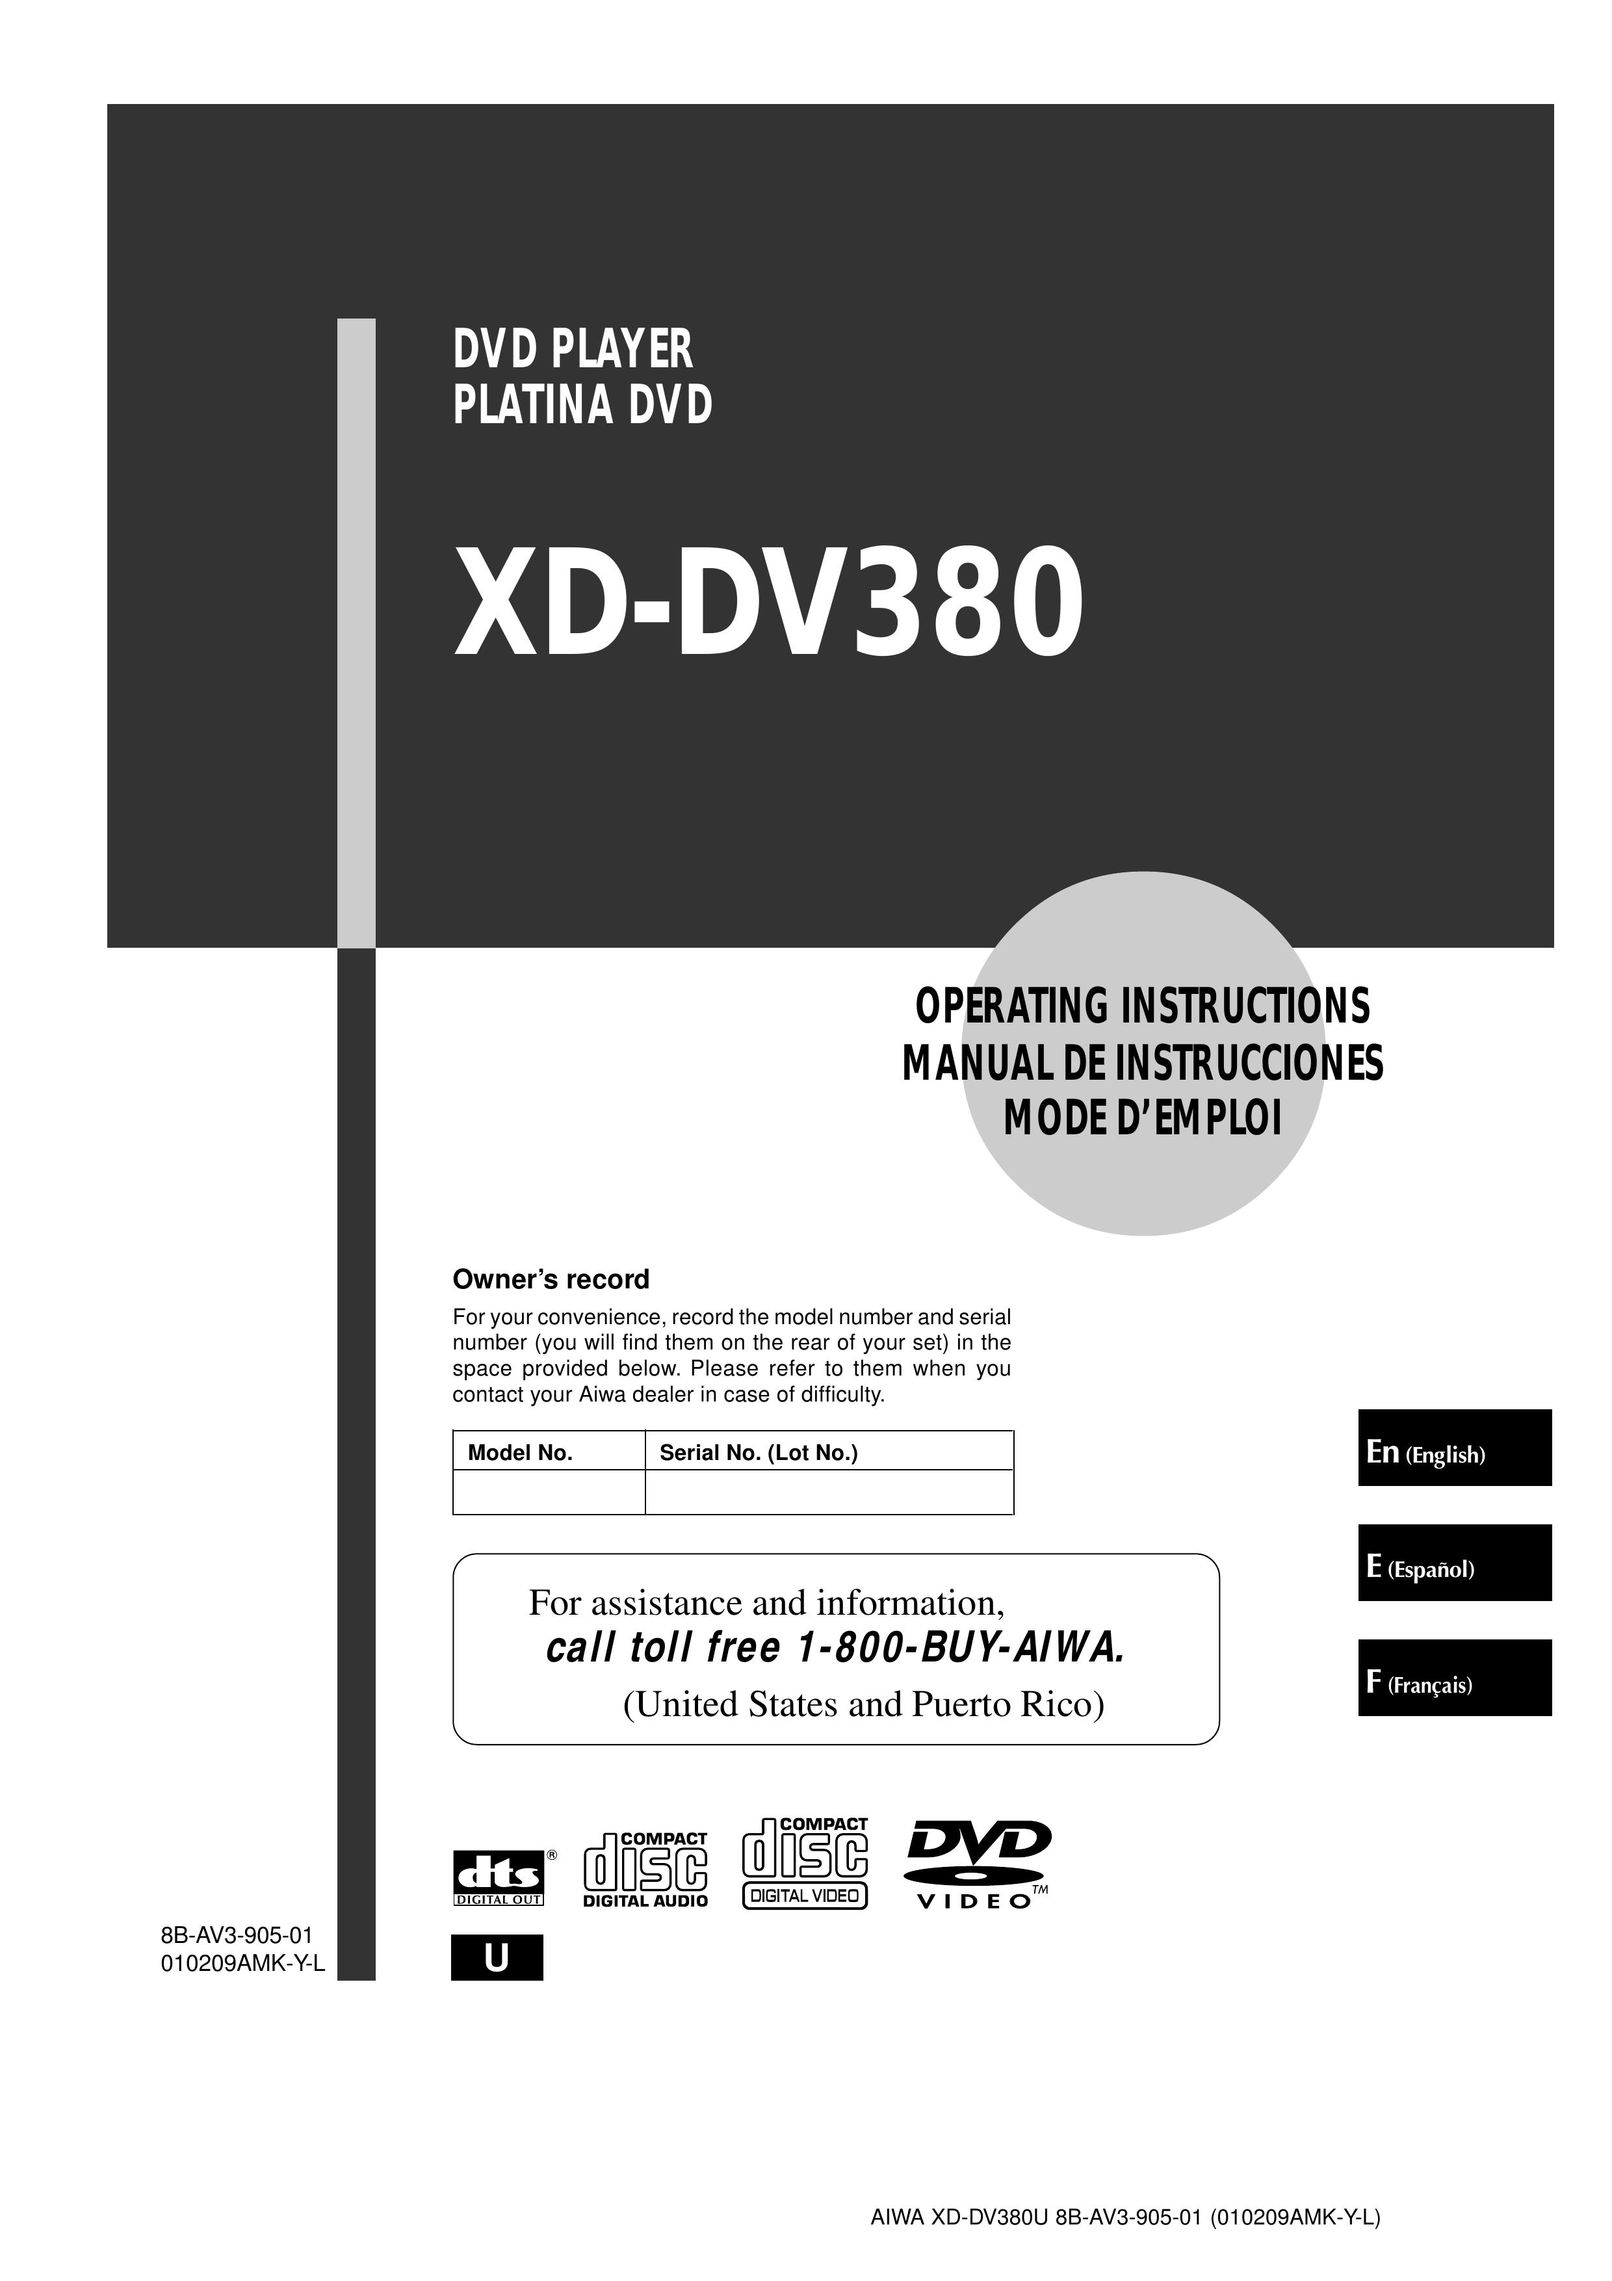 Aiwa XD-DV380U DVD Player User Manual